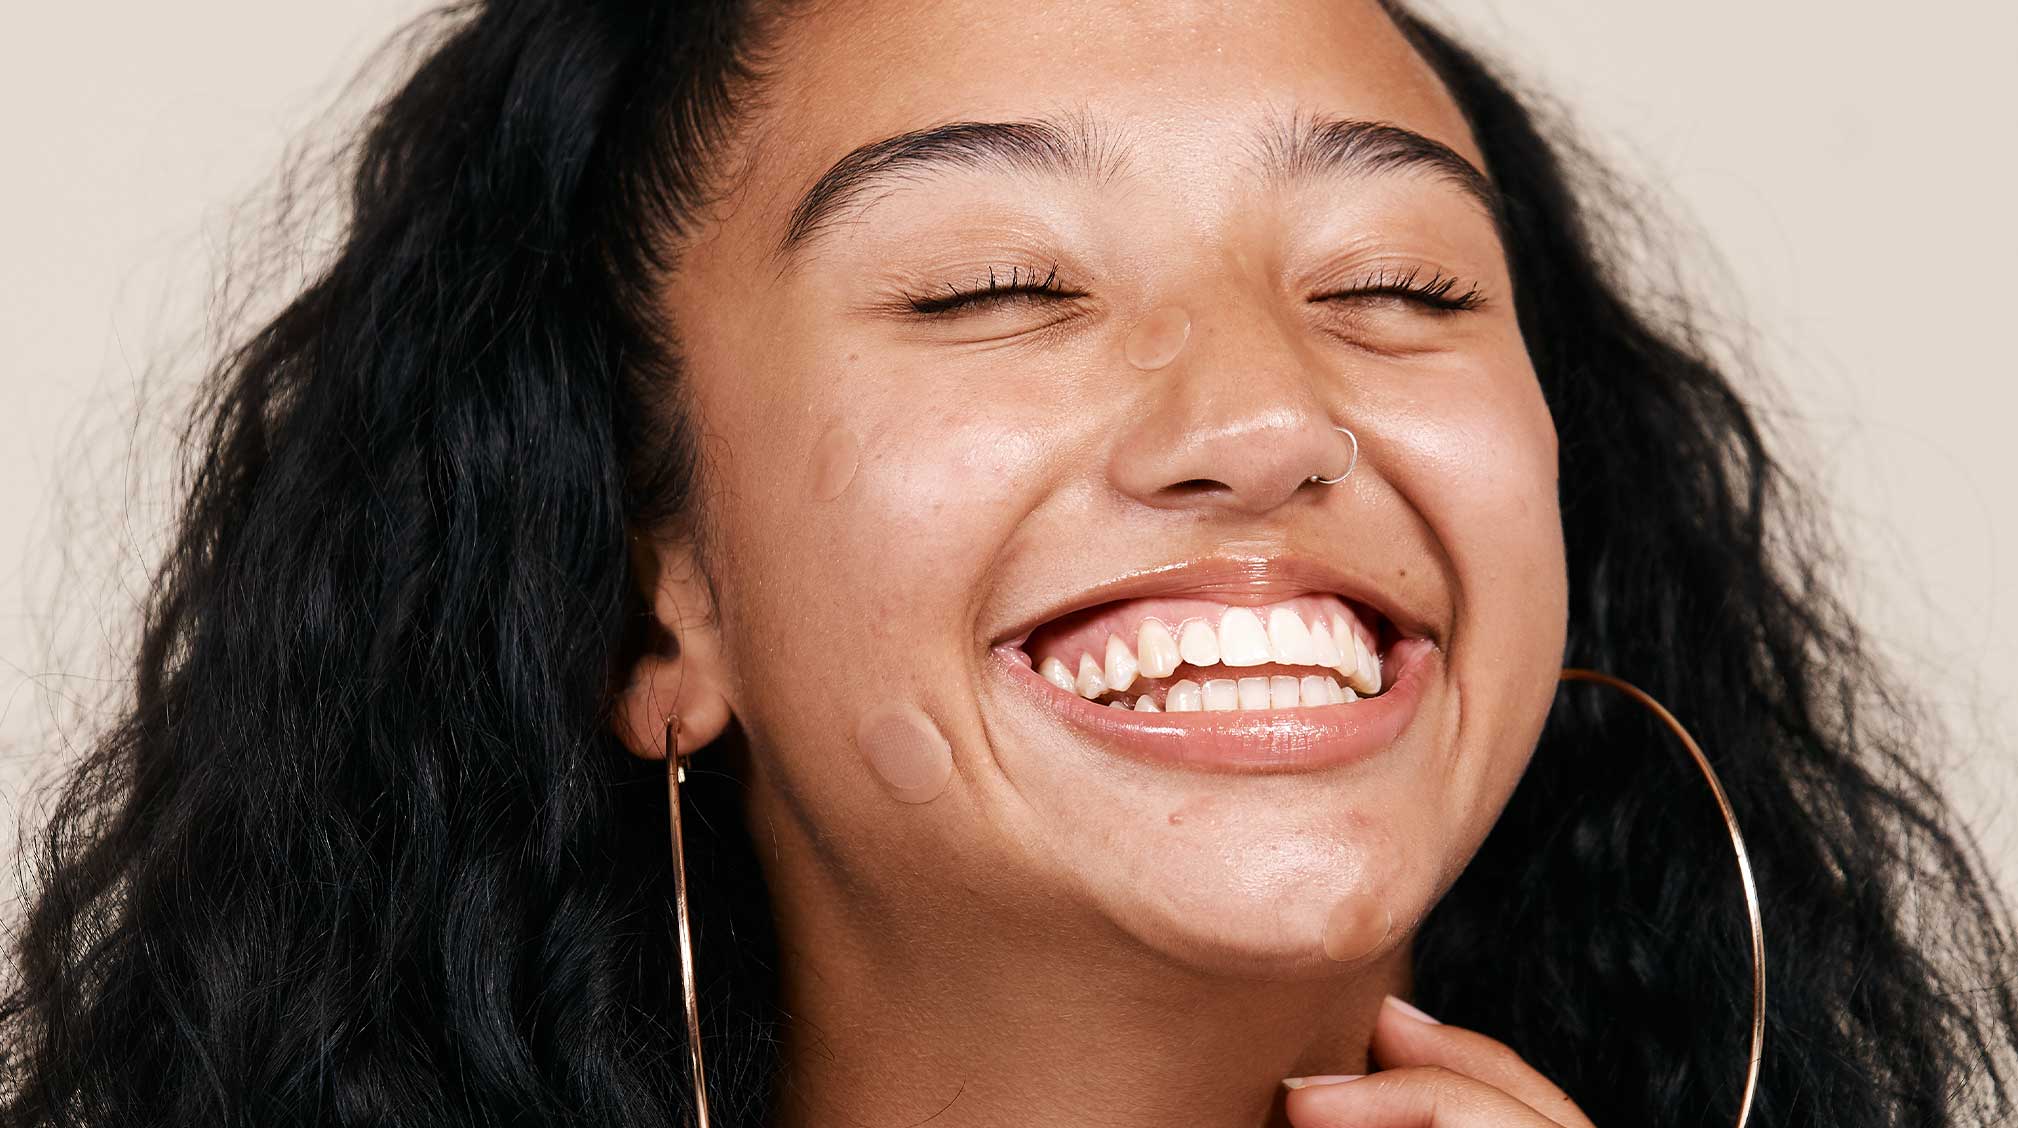 Got Sensitive skin? Here's How to Make Skin Tougher